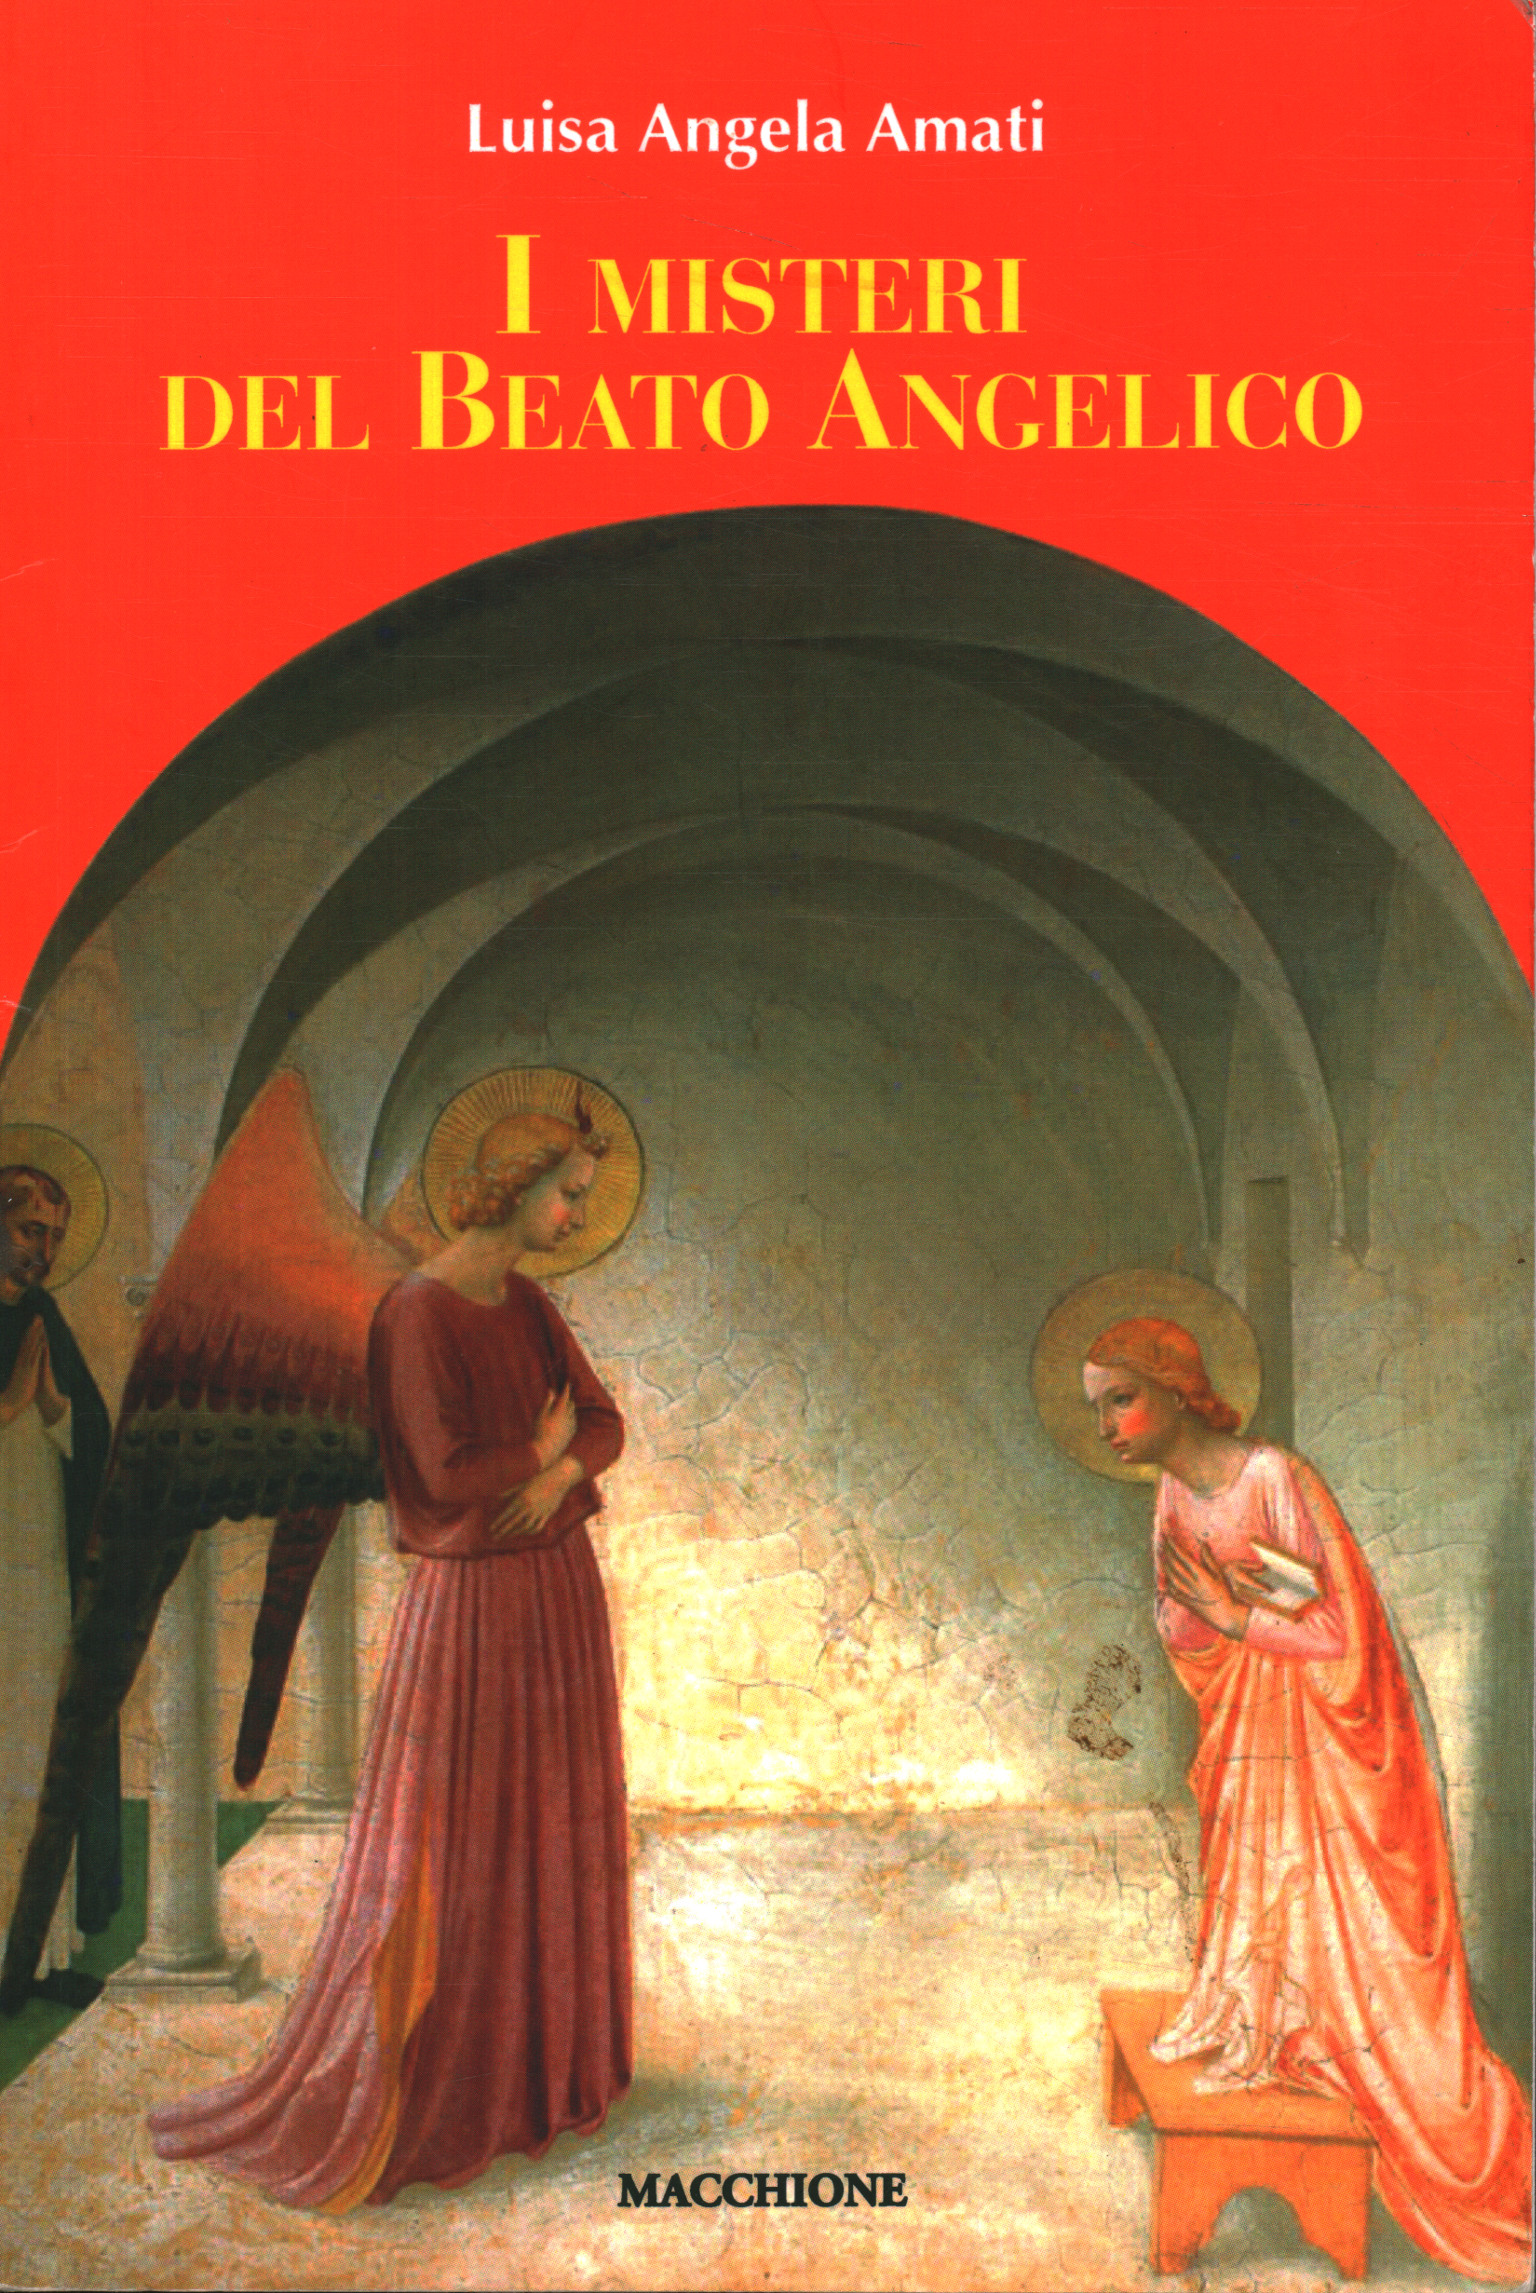 Les mystères de Fra Angelico